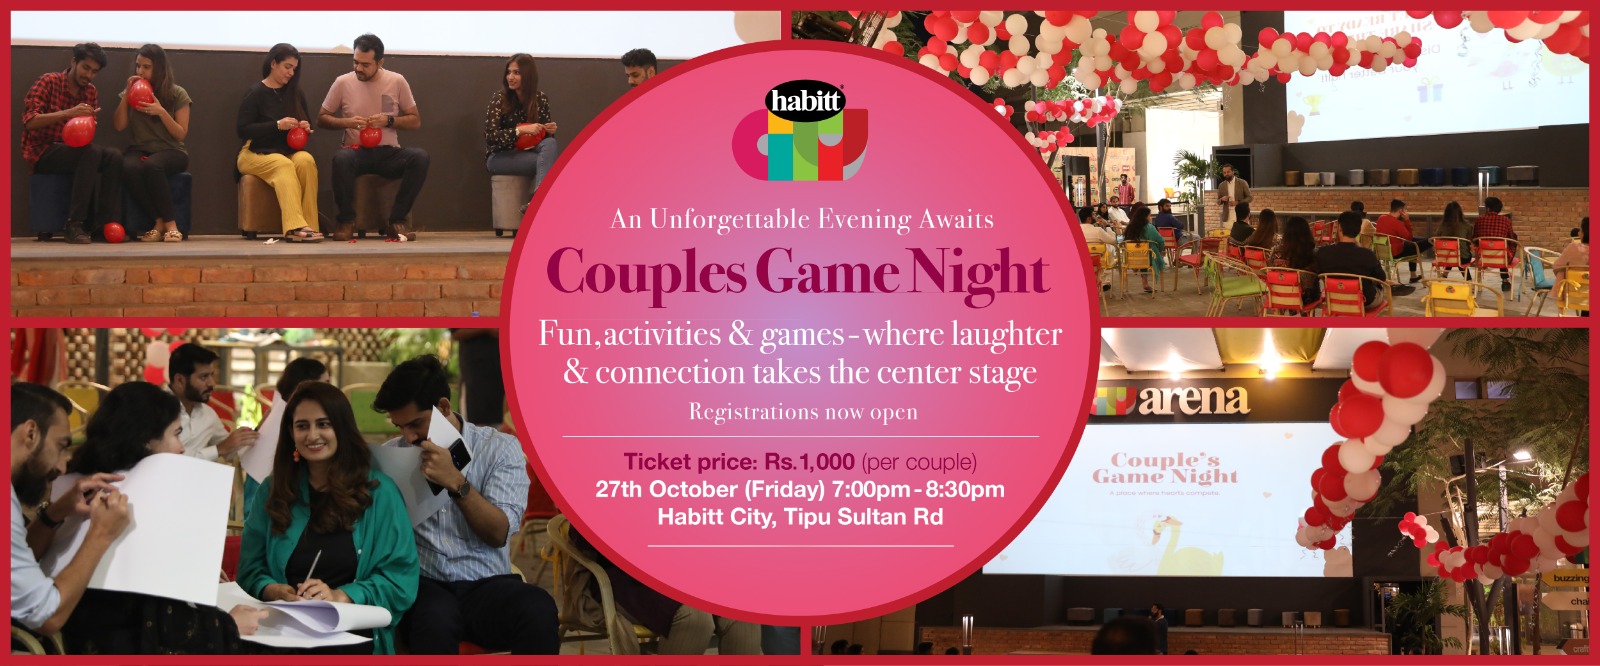 Couple's Game Night at Habitt City